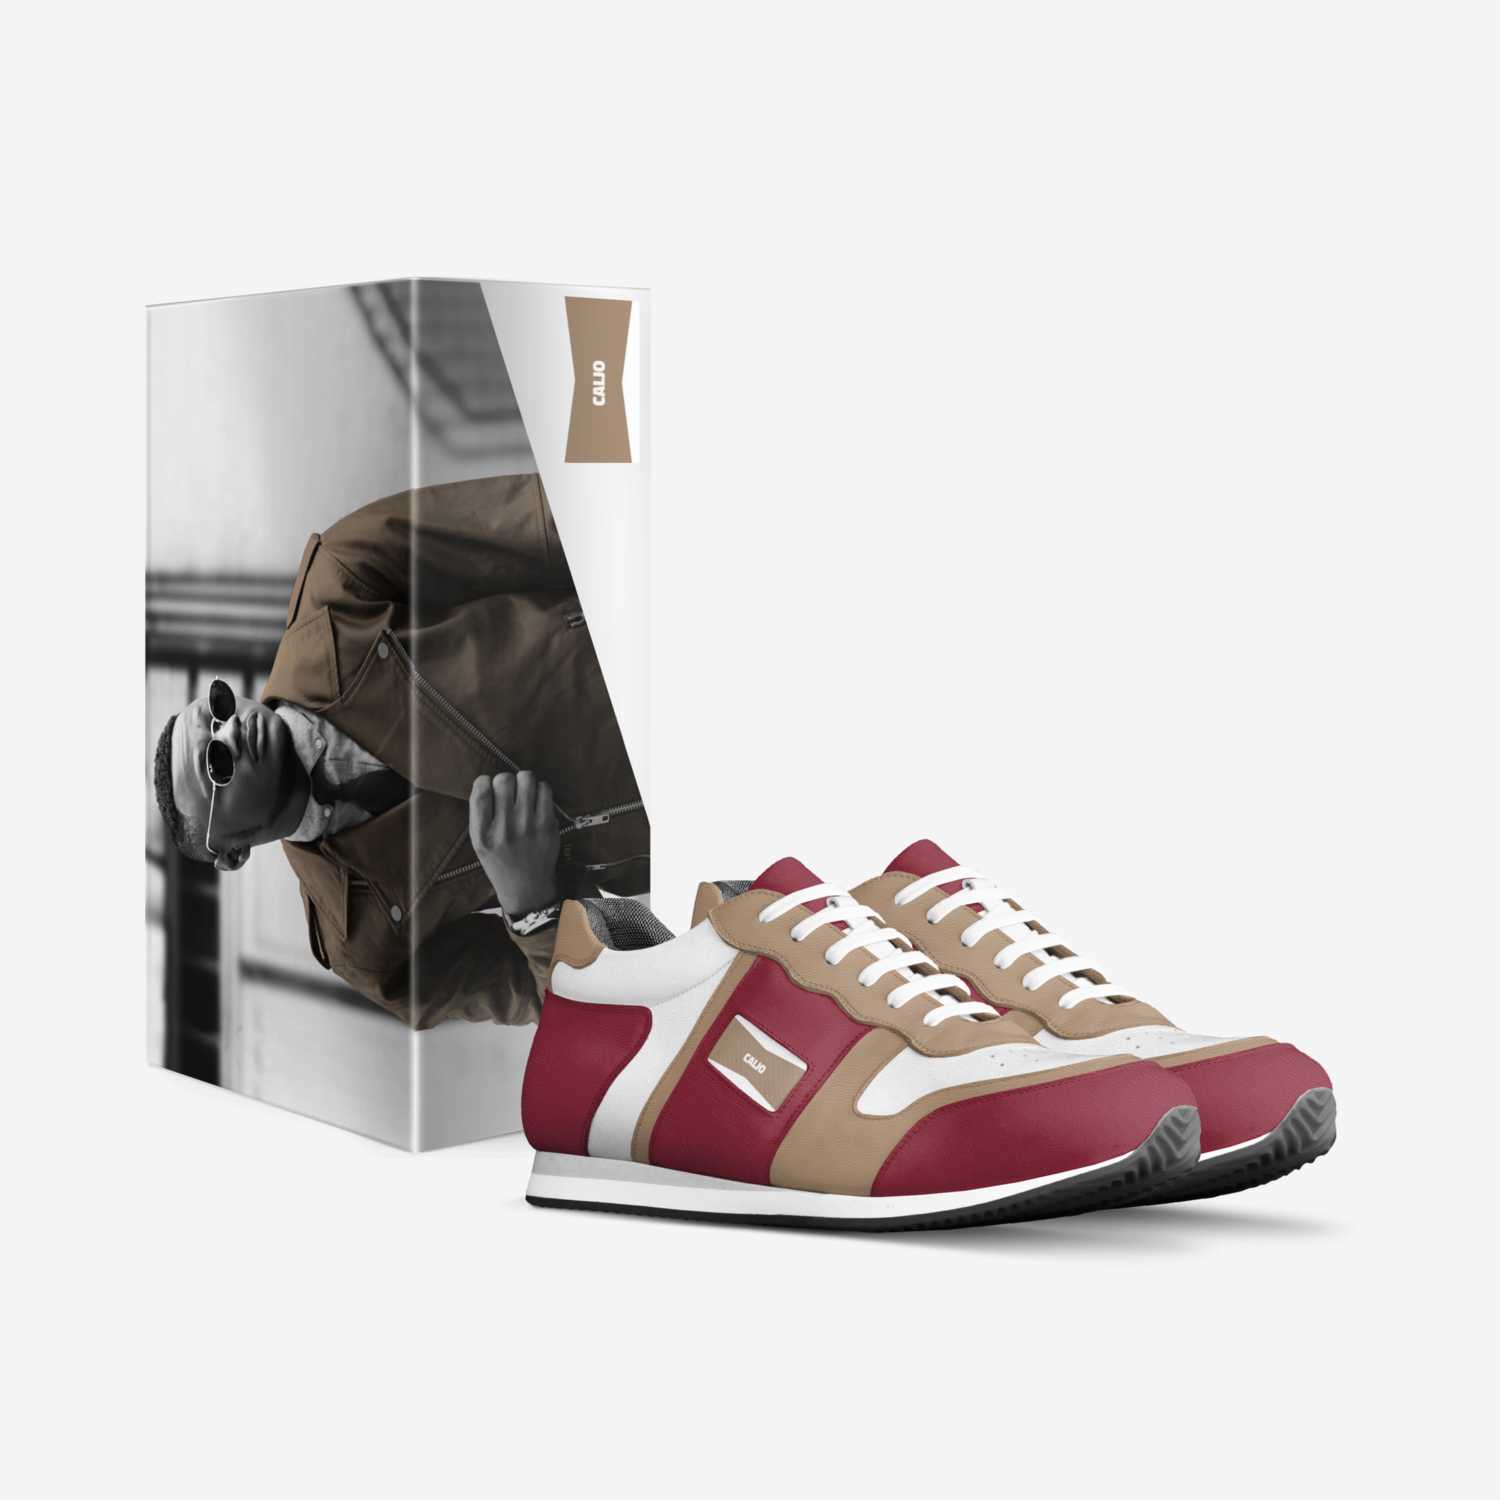 CALJO  custom made in Italy shoes by Calvin Johnson | Box view